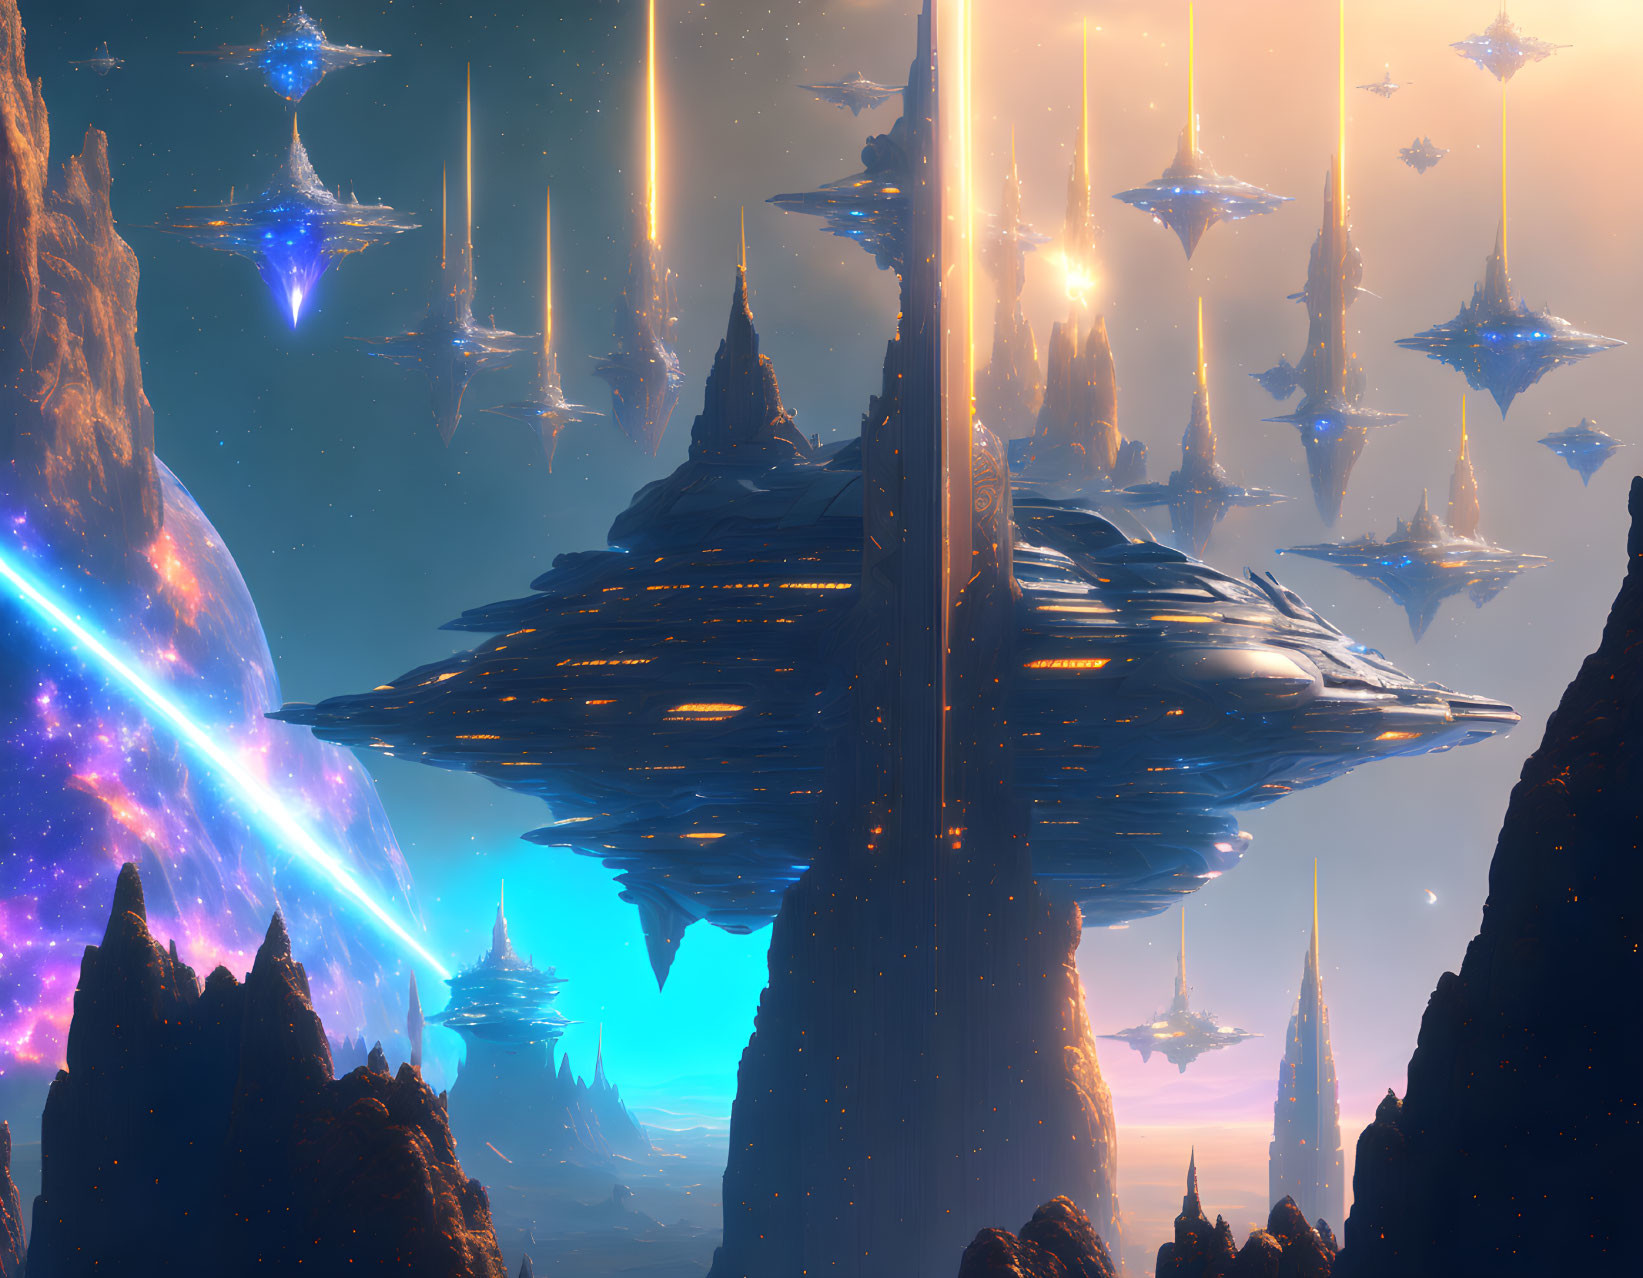 Futuristic spaceships in sci-fi scene with cosmic backdrop